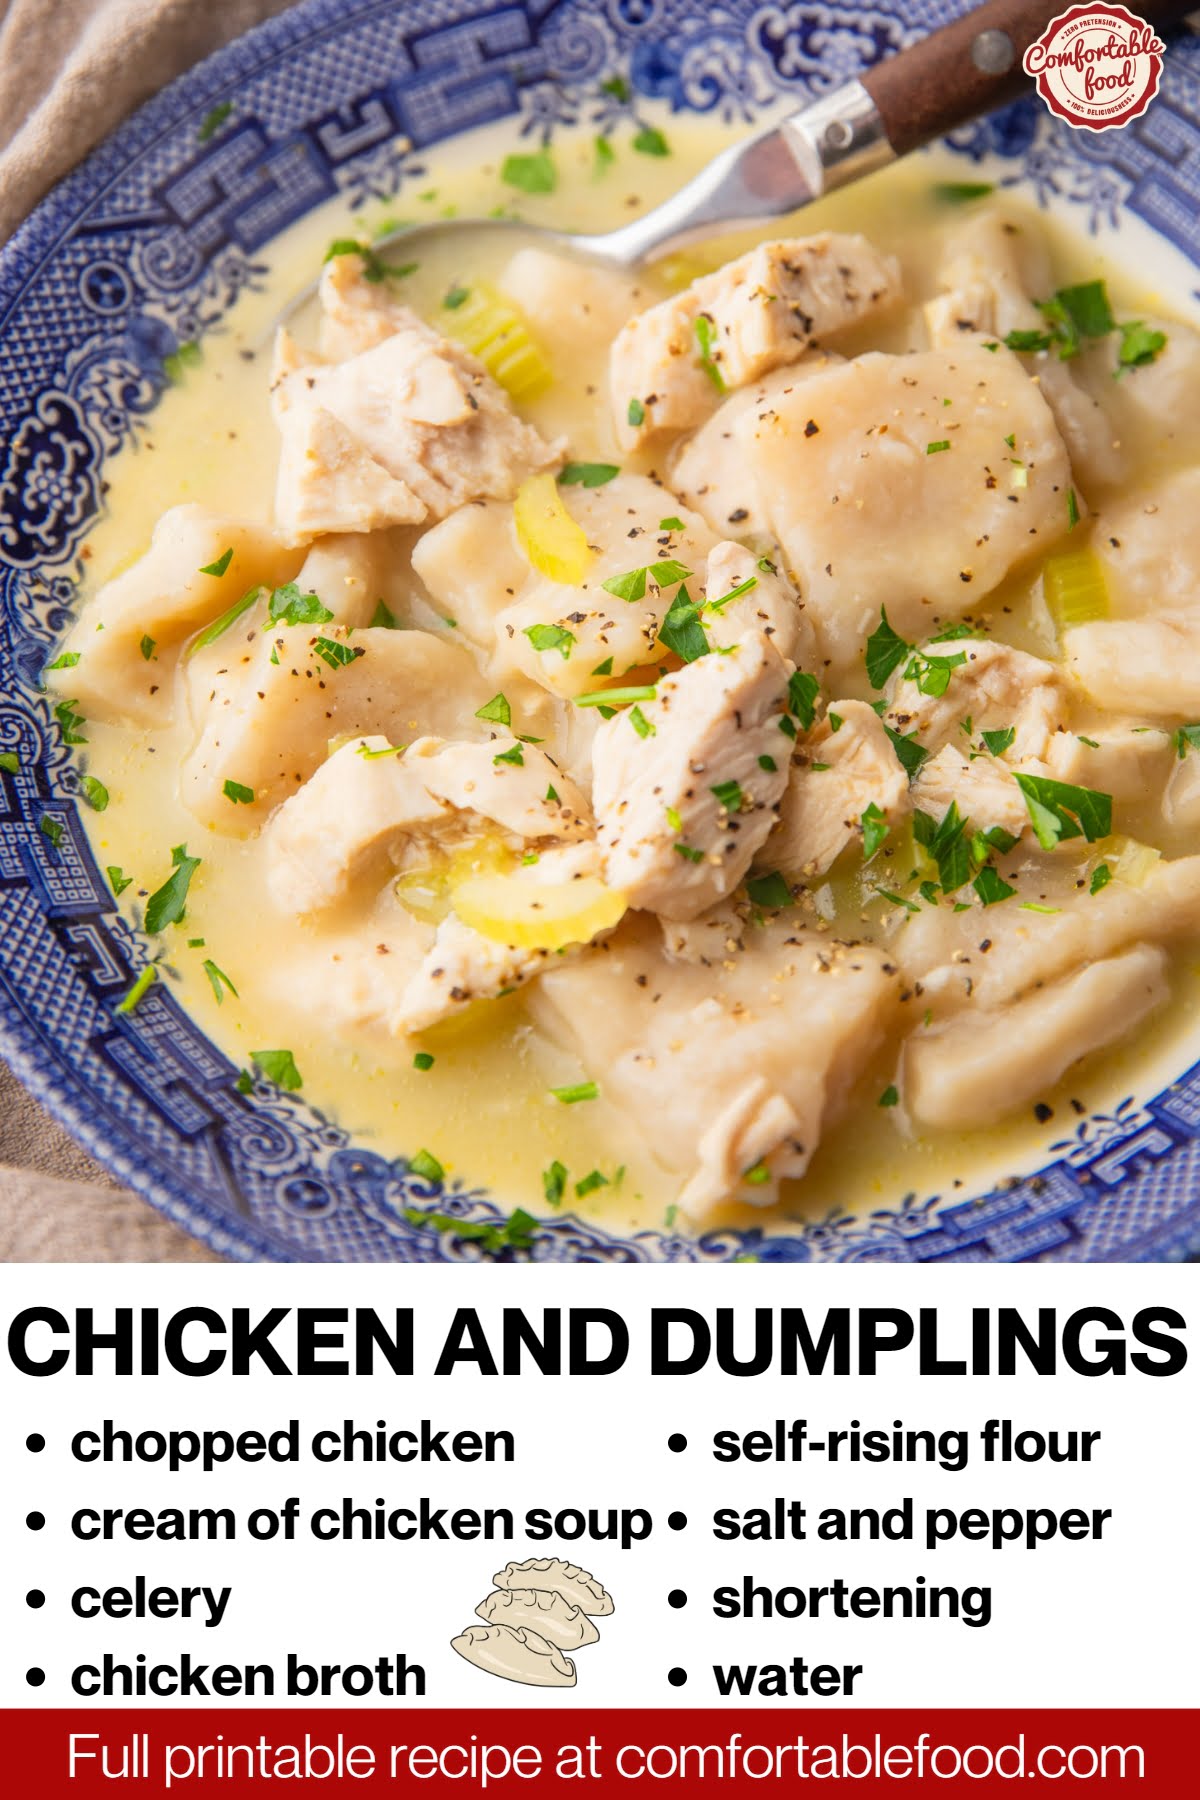 Chicken and dumplings - socials